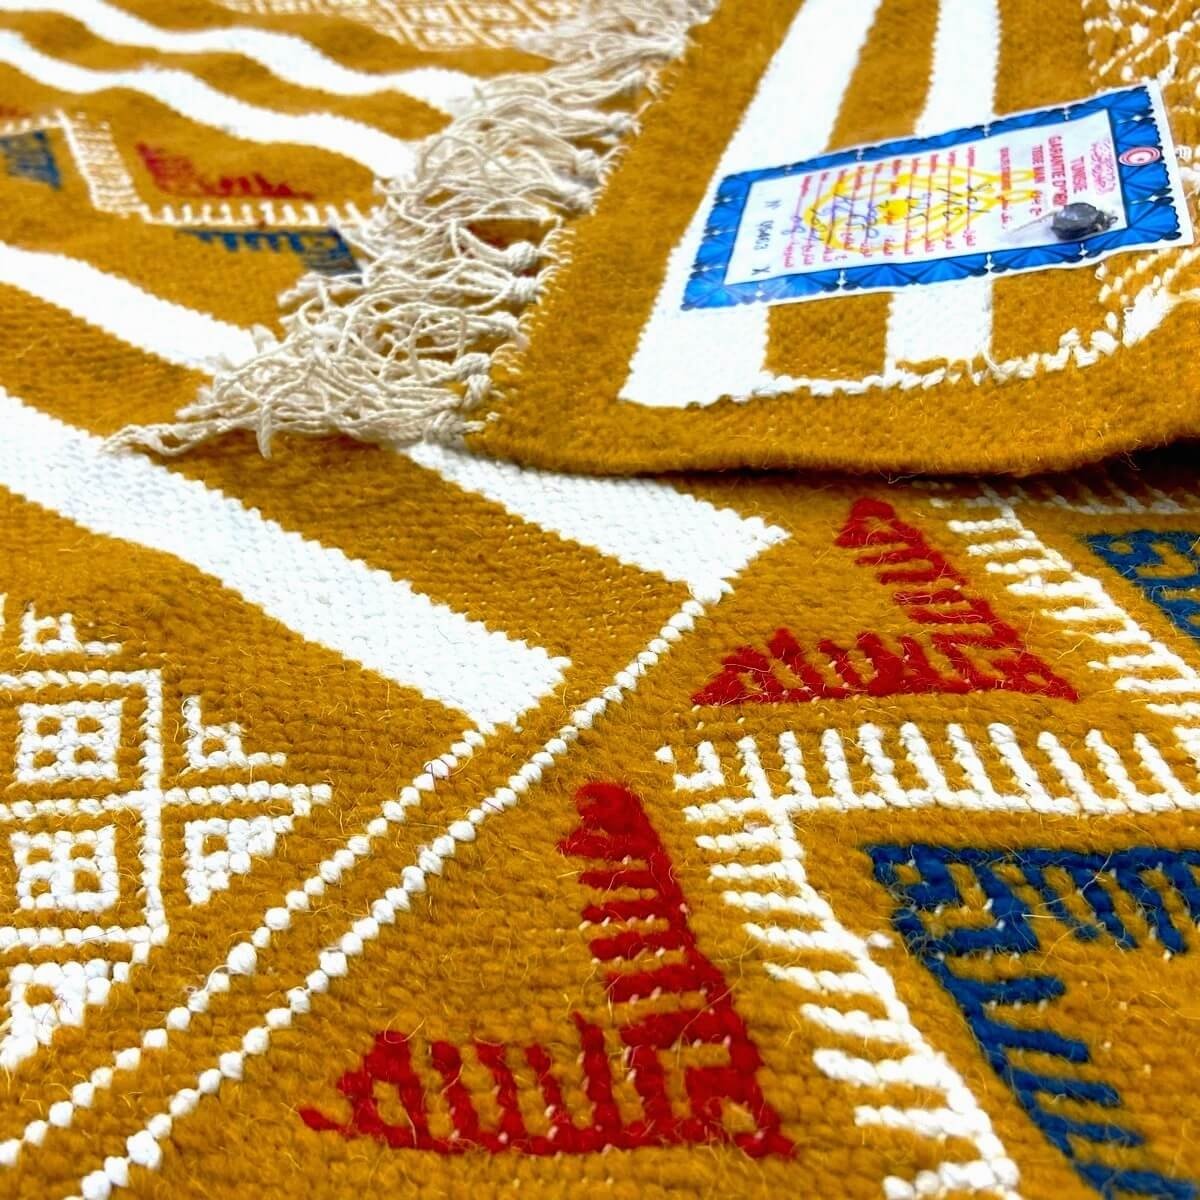 Berber tapijt Tapijt Kilim Tegiza 112x200 Geel/Wit (Handgeweven, Wol, Tunesië) Tunesisch kilimdeken, Marokkaanse stijl. Rechthoe